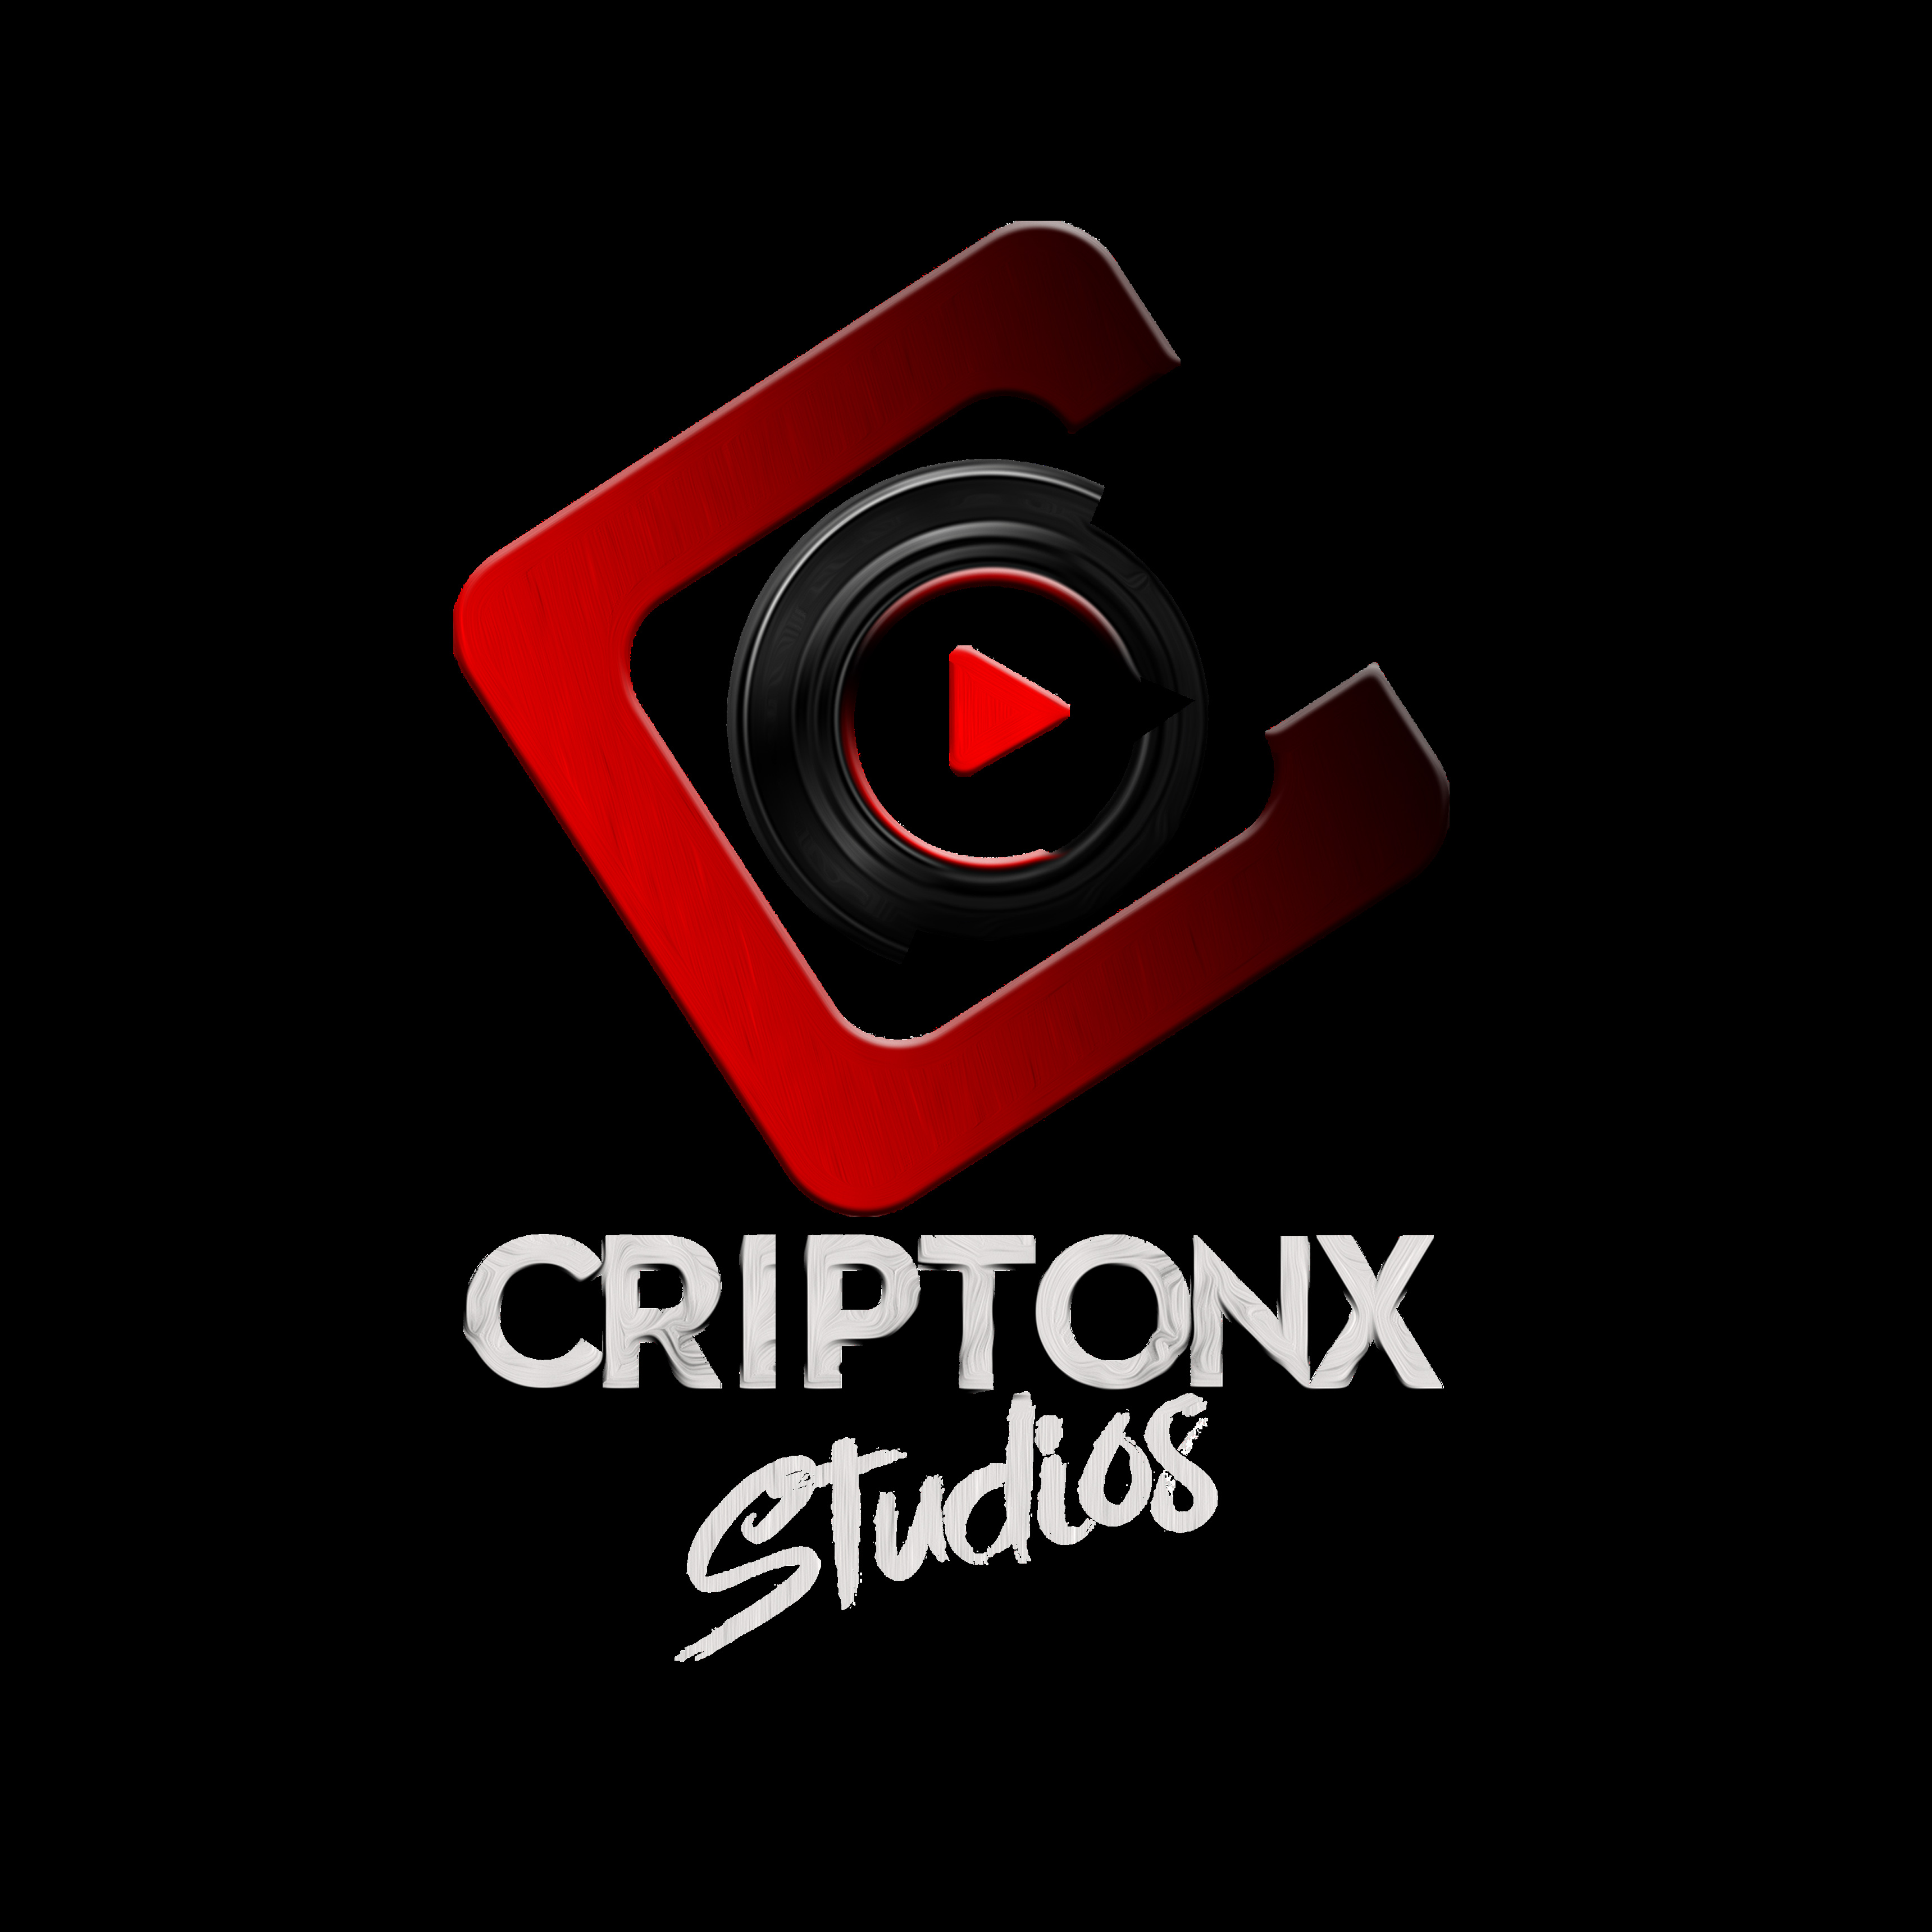 Criptonx Studios provider